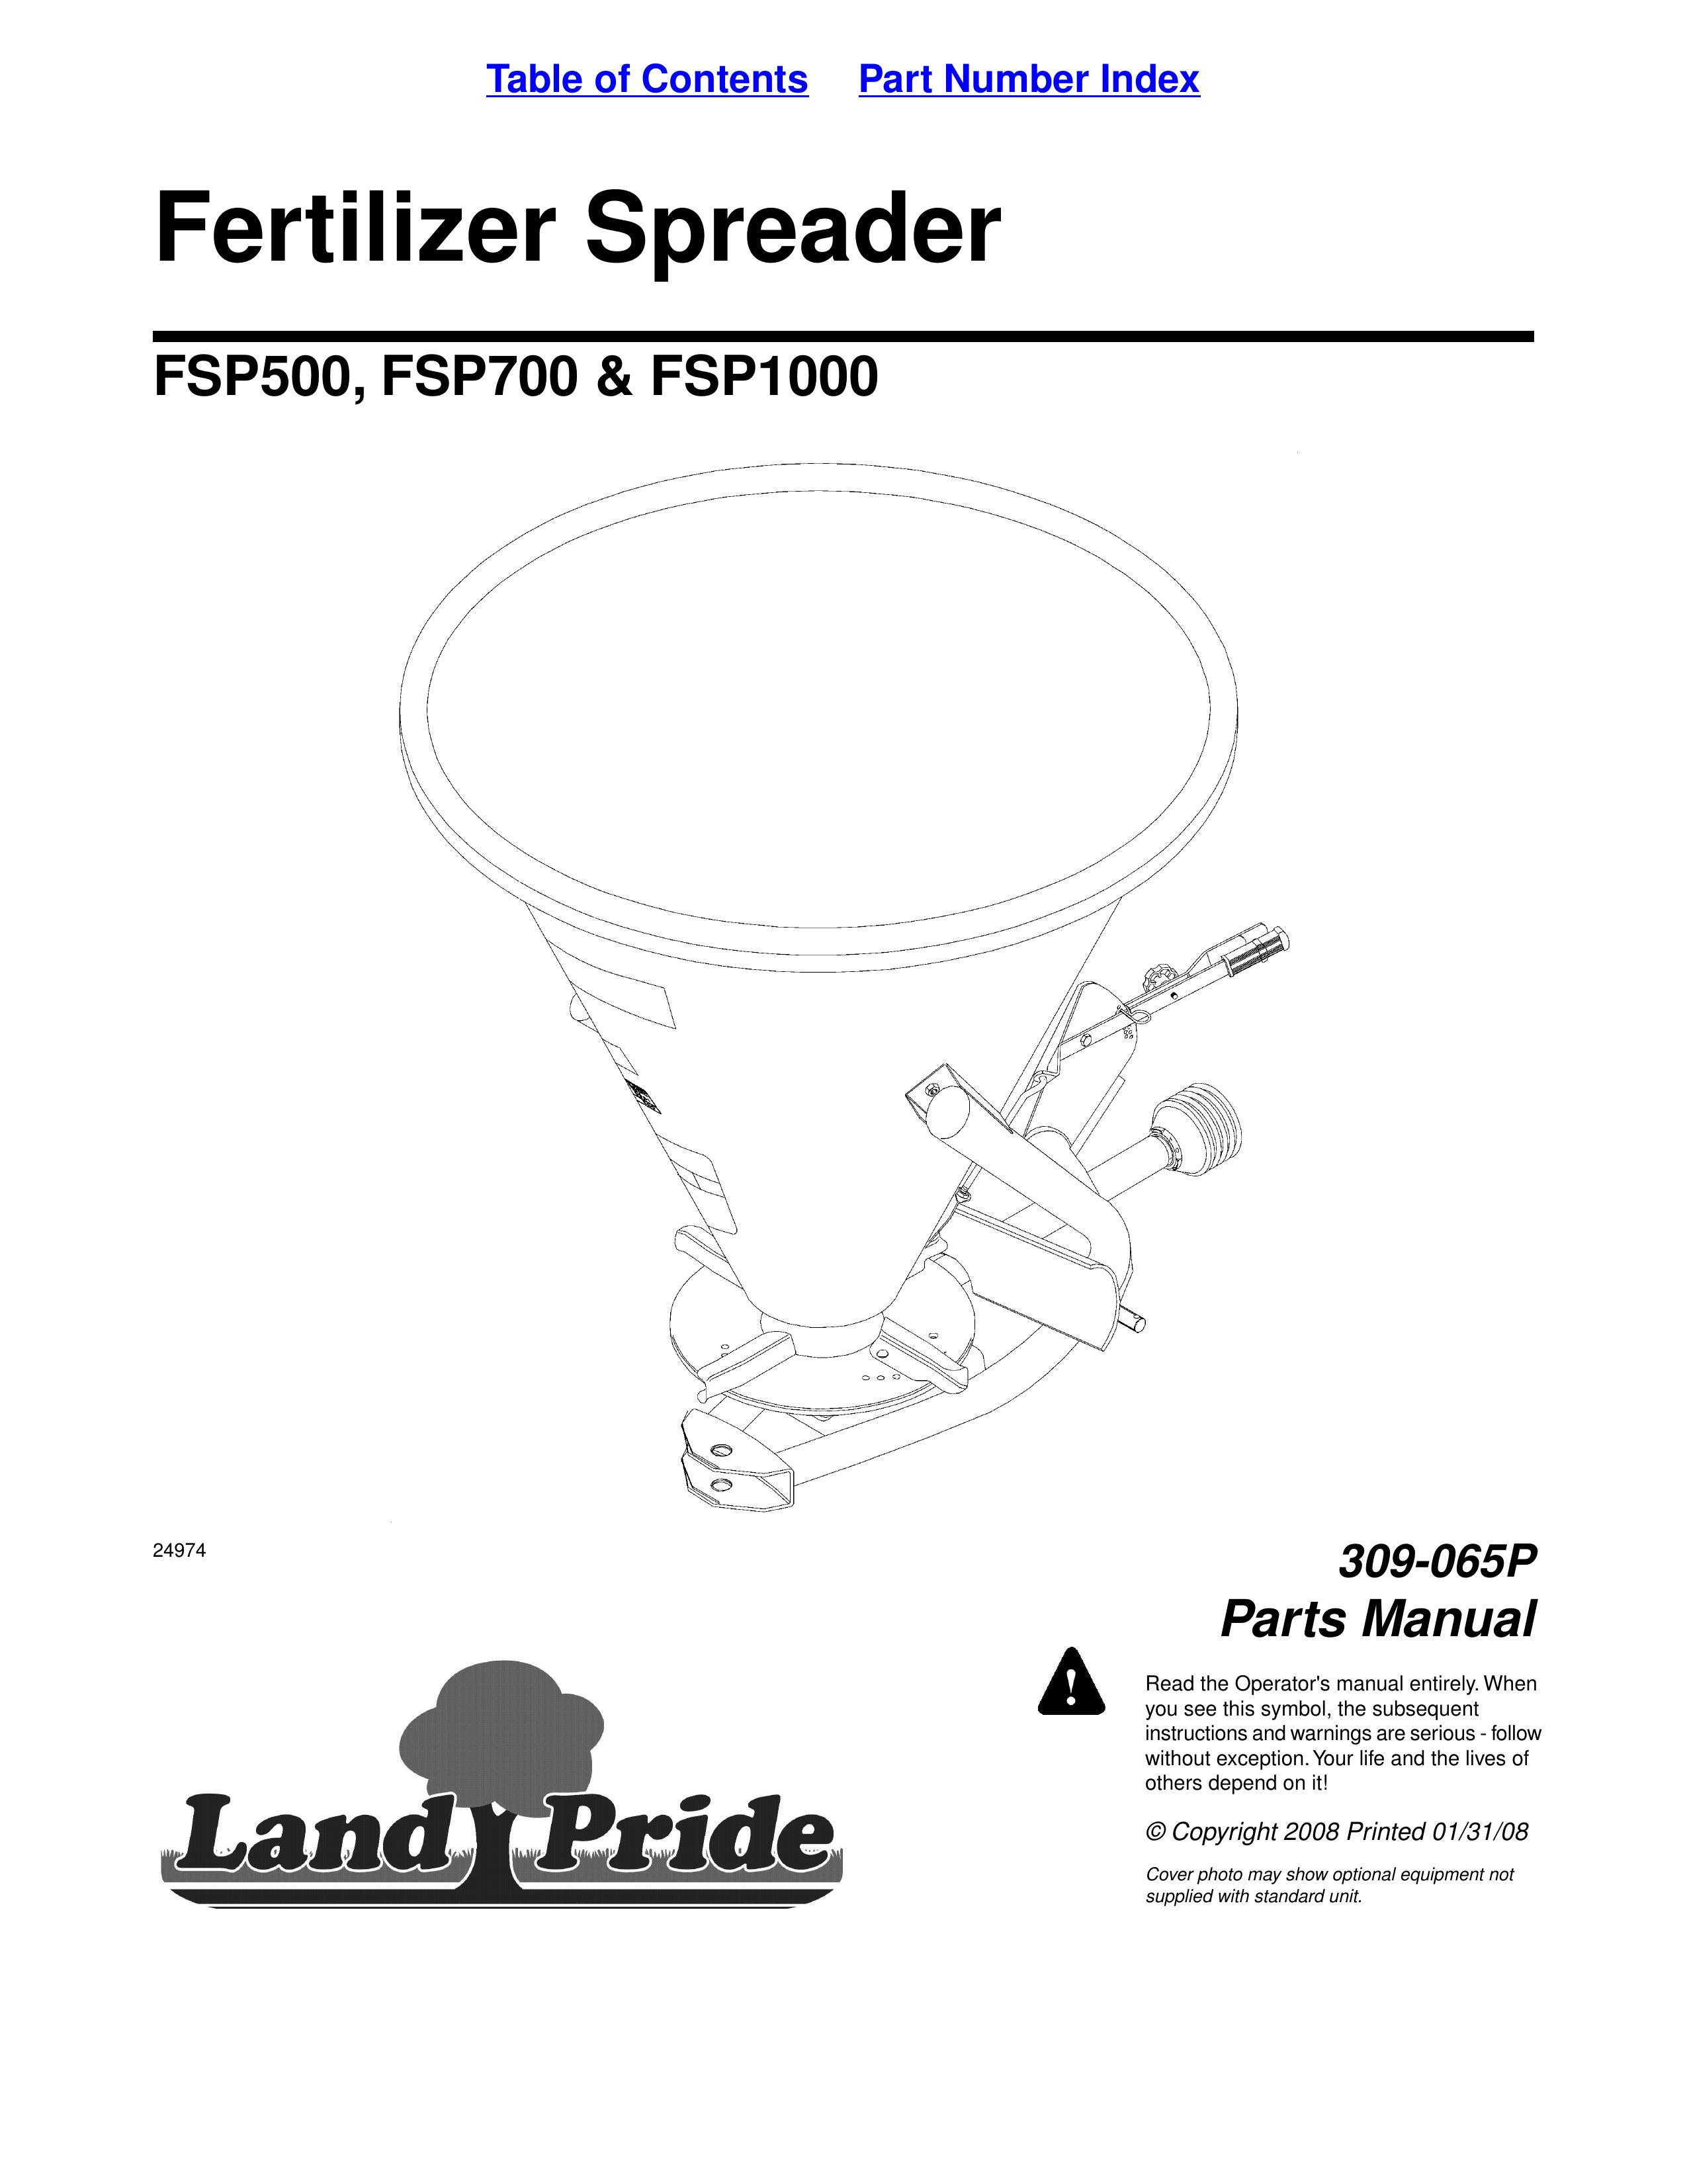 Land Pride FSP700 Spreader User Manual